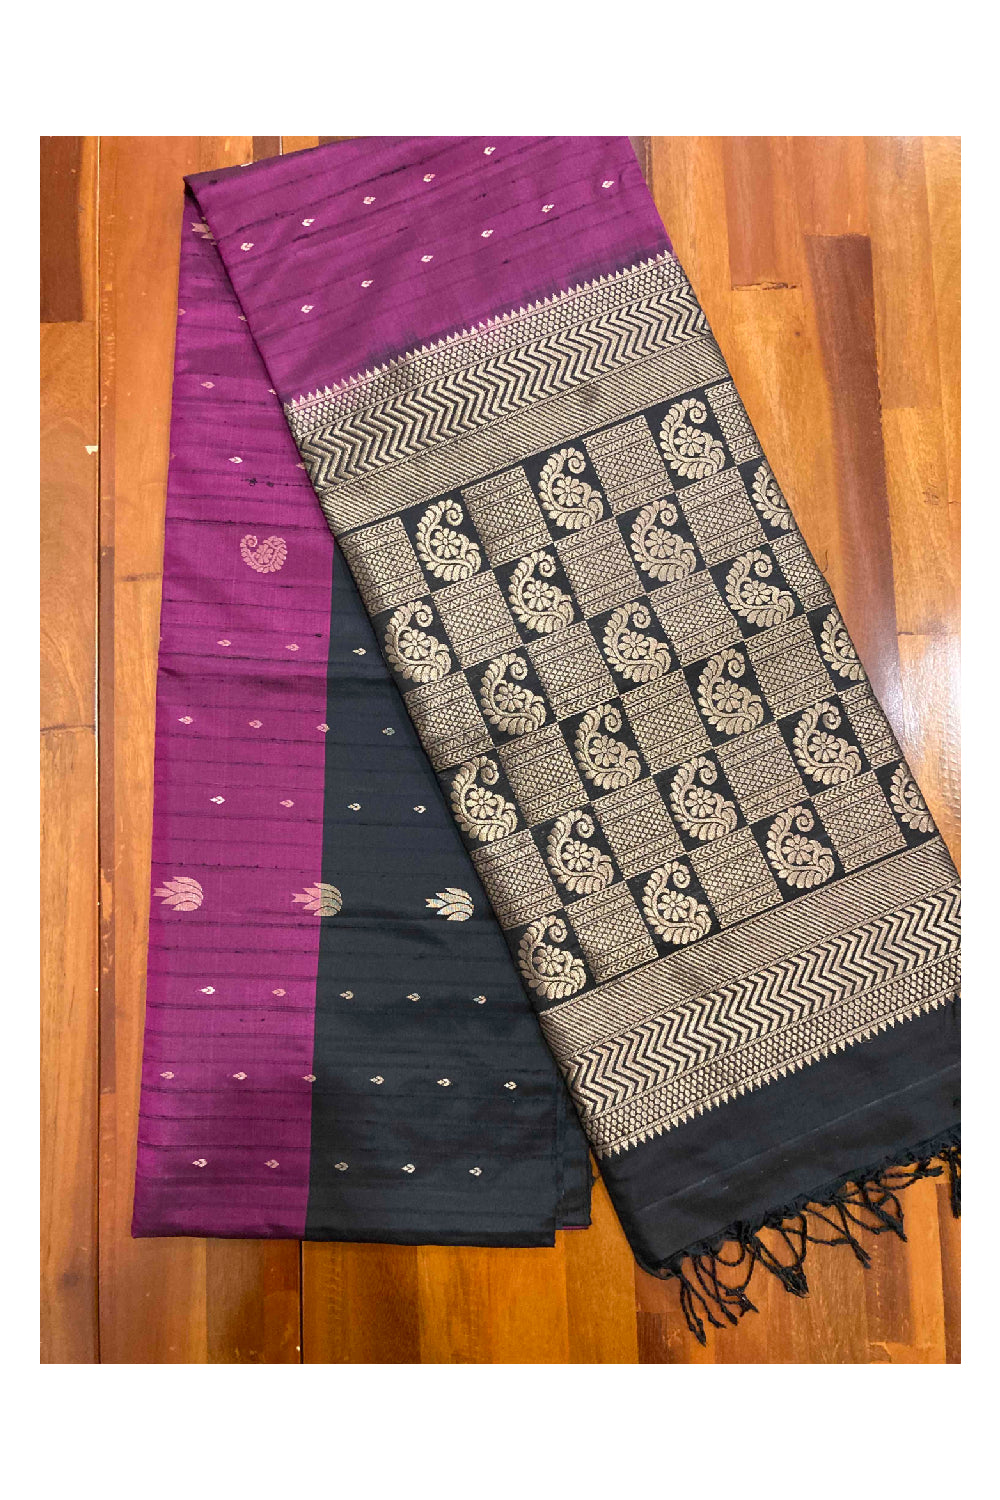 Southloom Handloom Pure Silk Kanchipuram Saree in Grape Purple Paisley Motifs